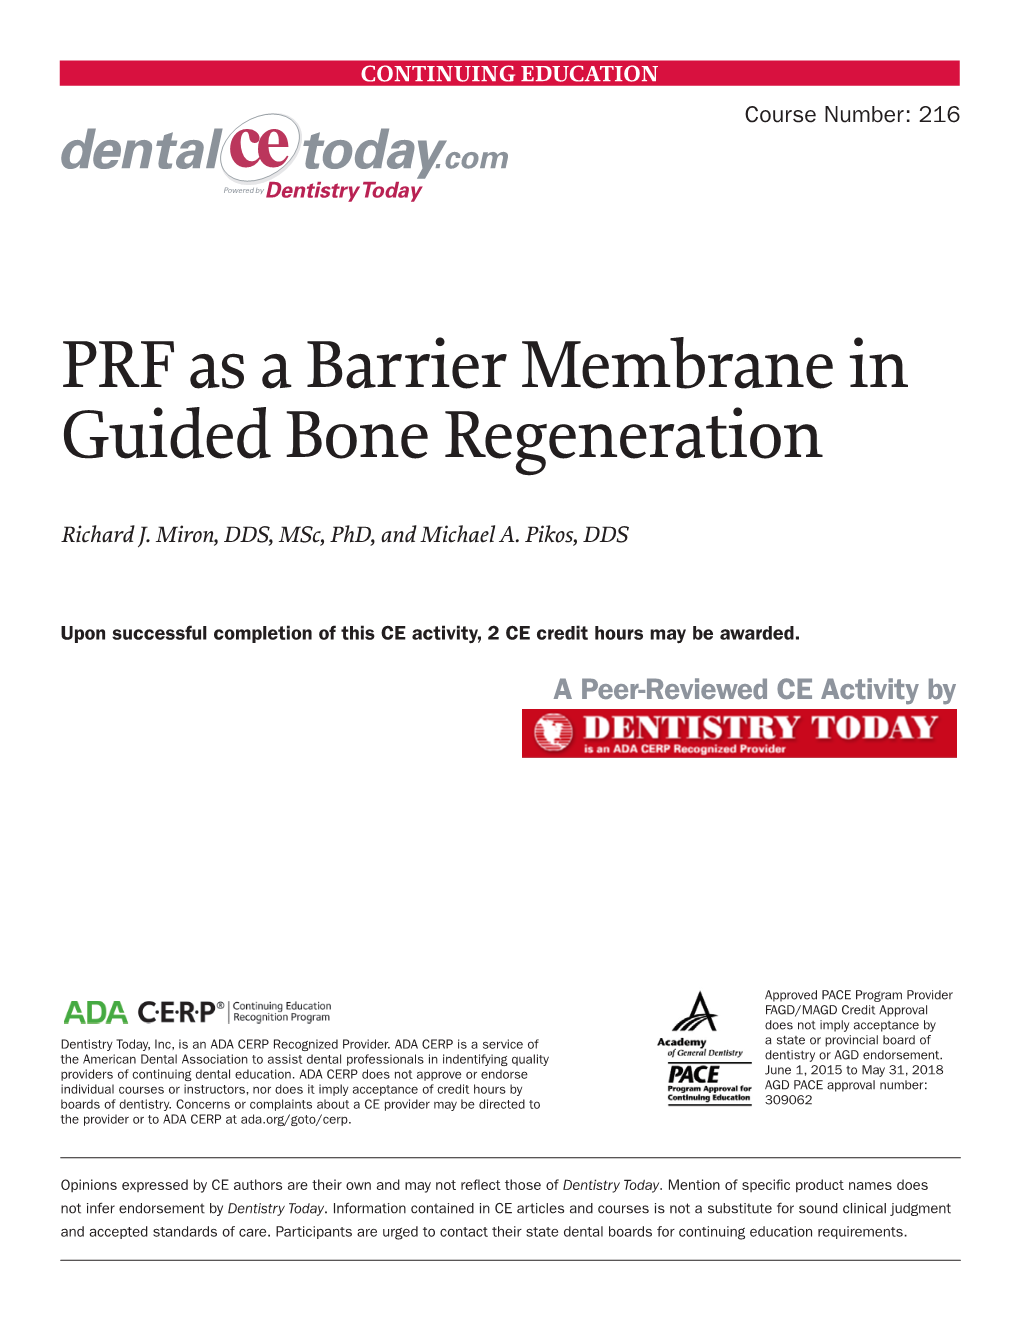 PRF As a Barrier Membrane in Guided Bone Regeneration